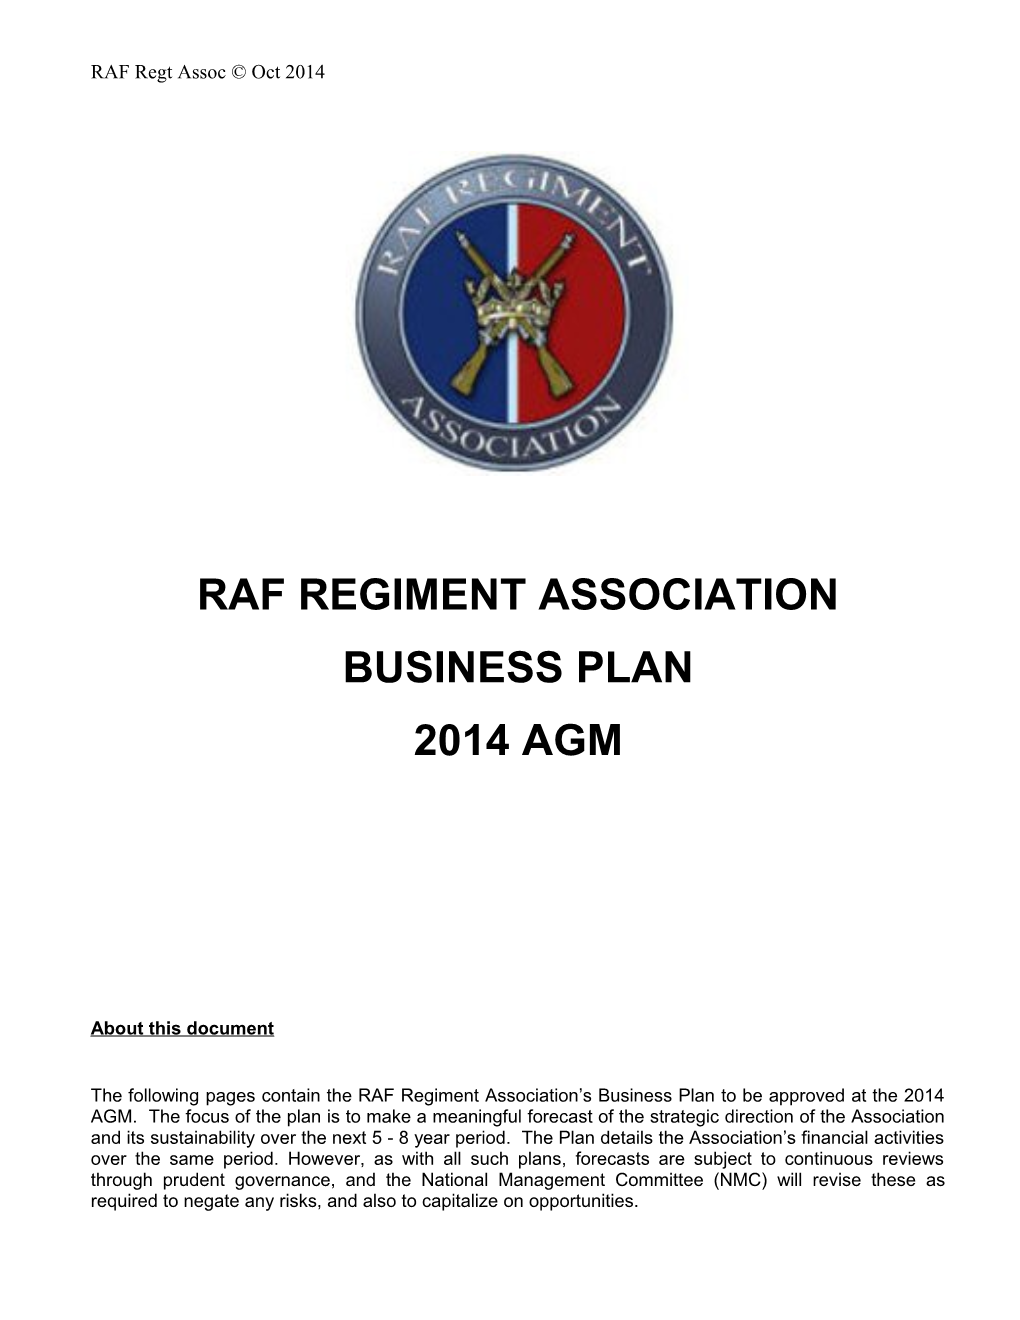 Raf Regiment Association